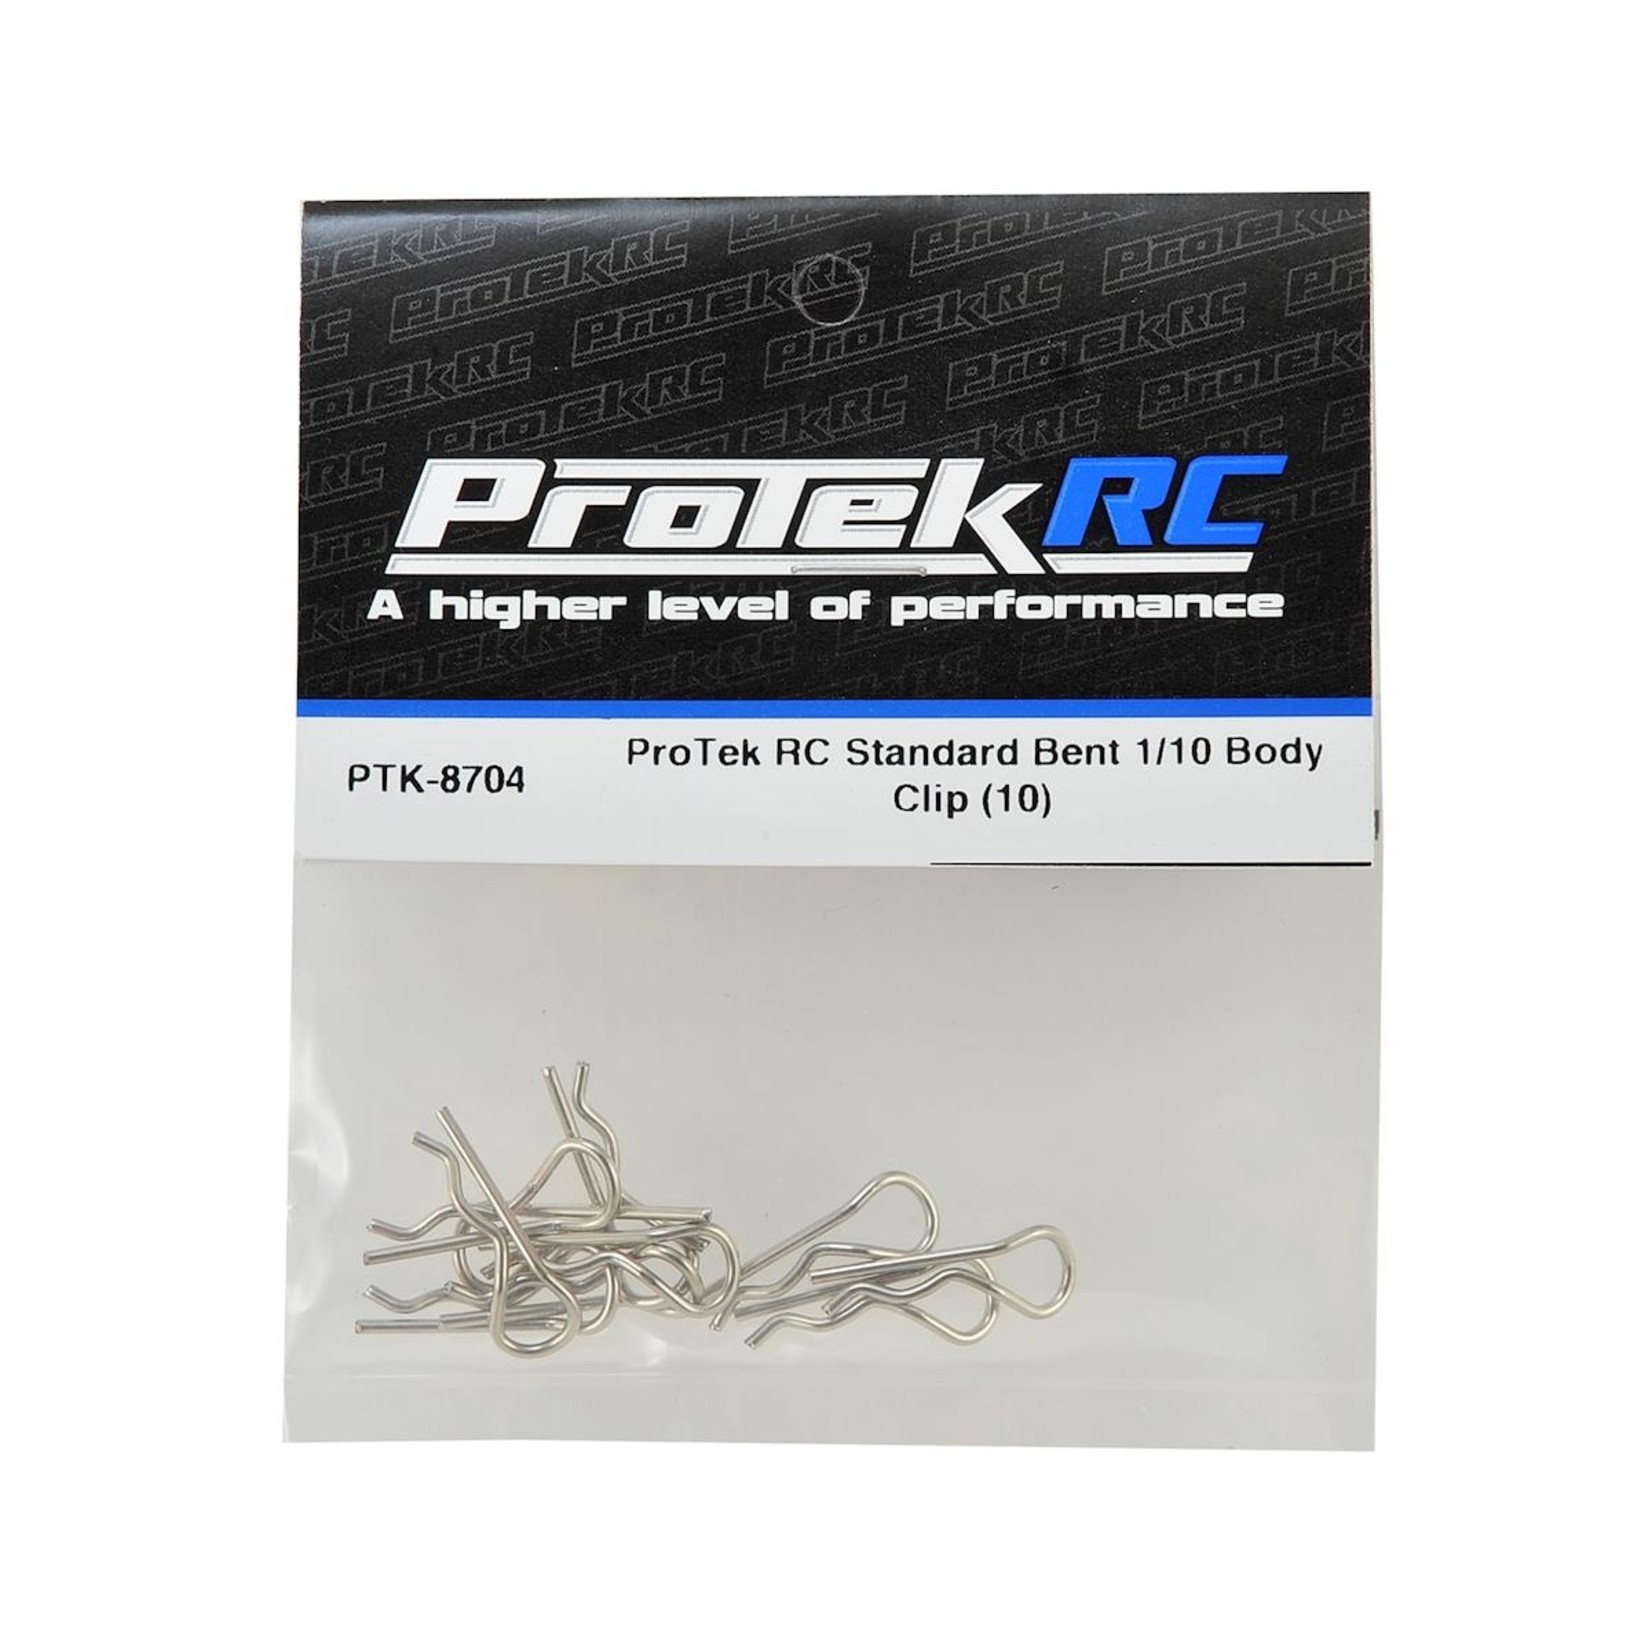 Protek R/C ProTek RC Standard Bent Body Clip (10) (1/10 Scale)